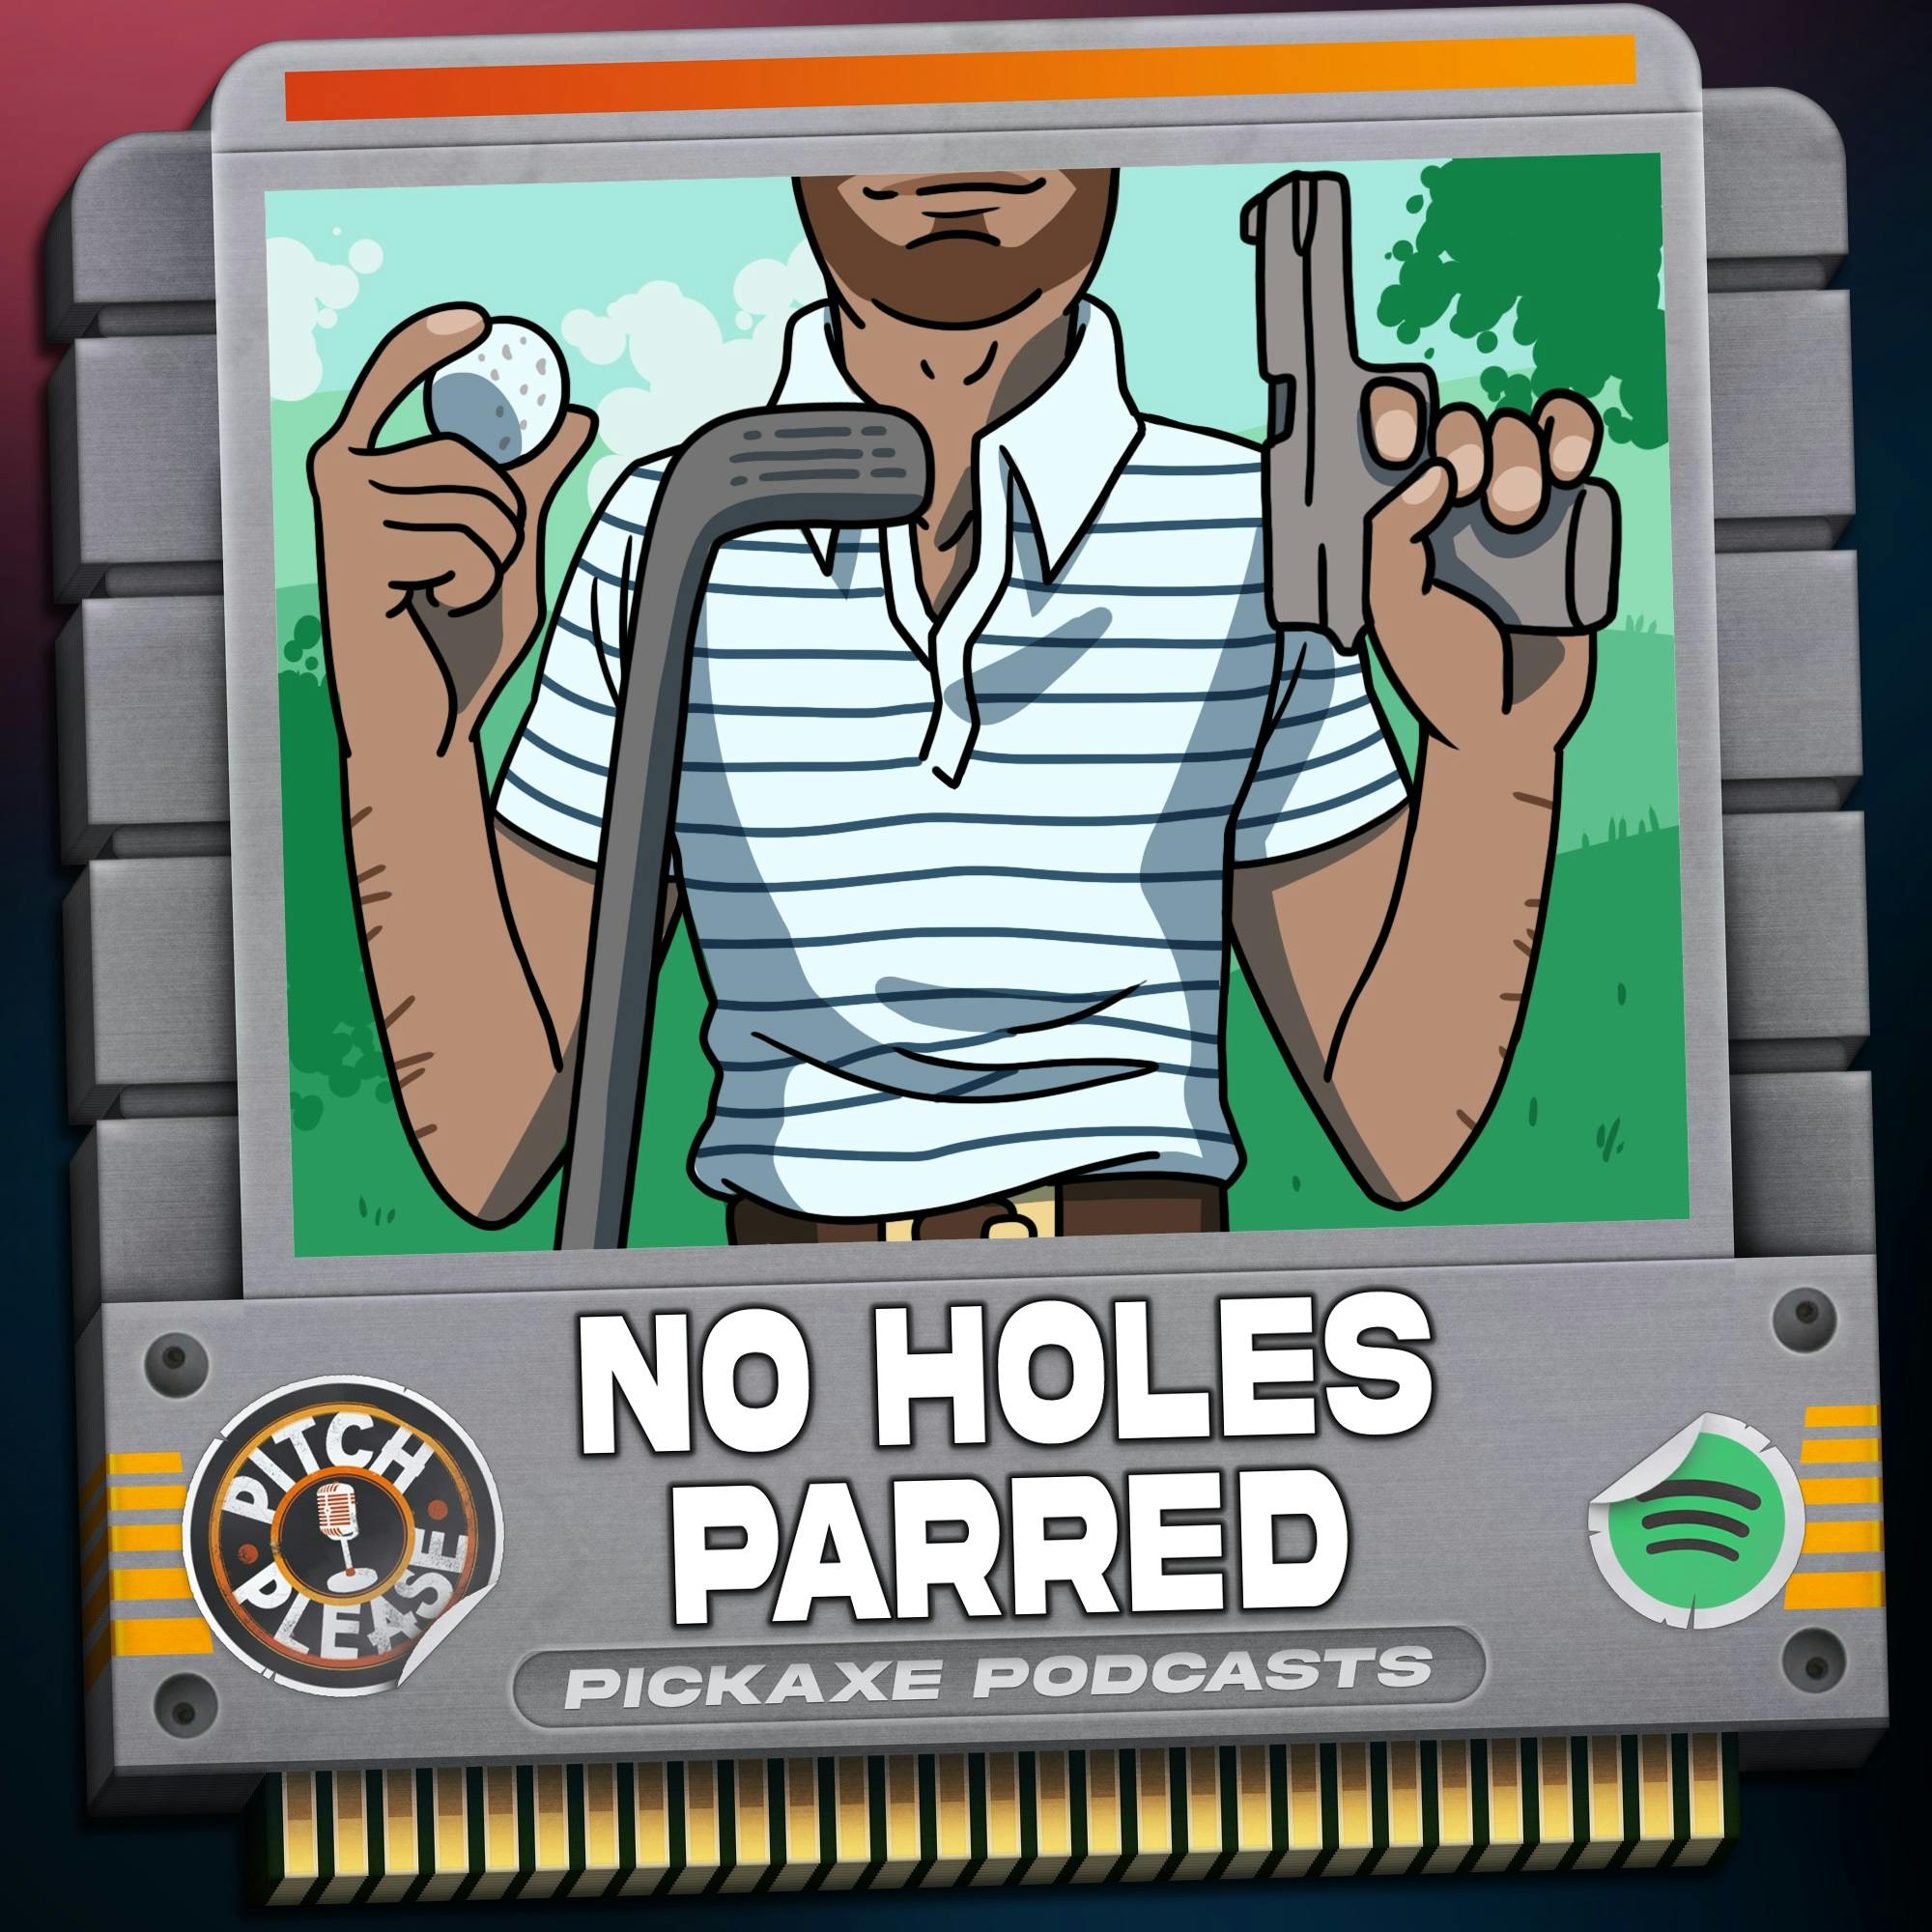 Pitch, Please - No Holes Parred